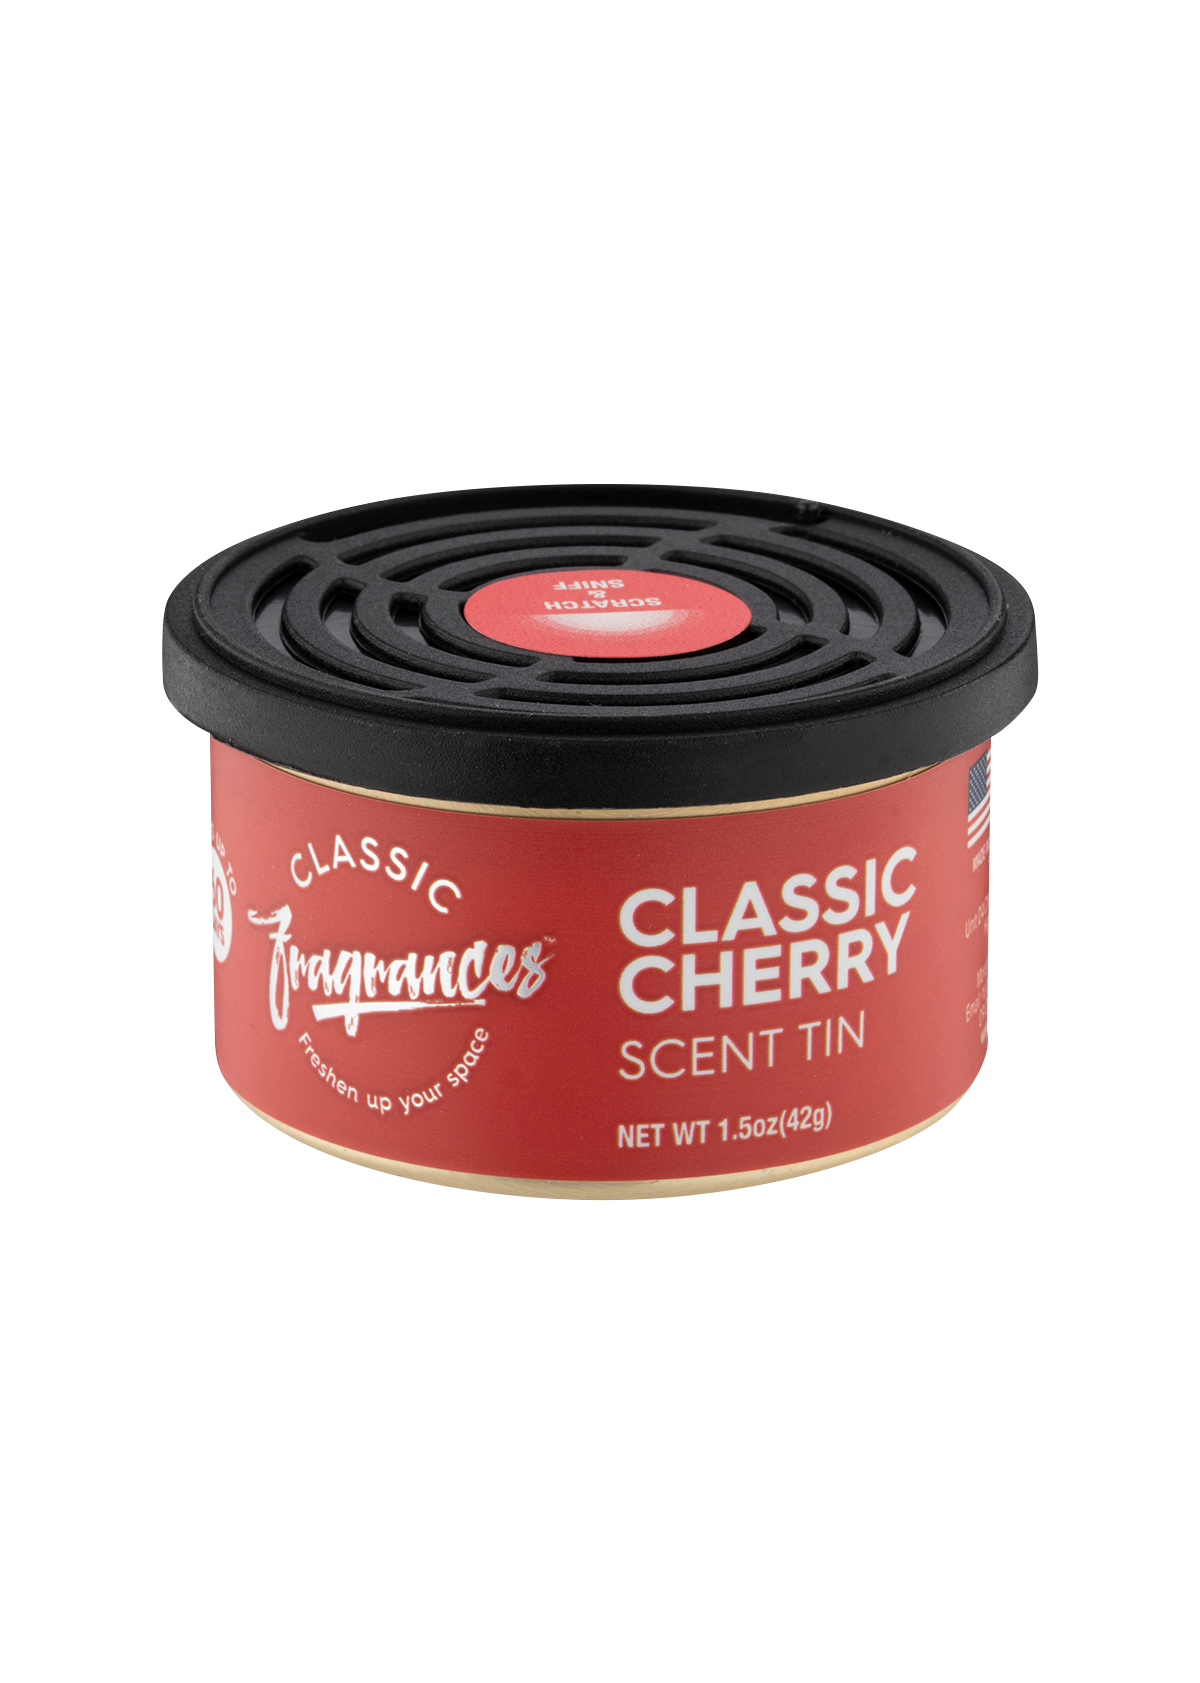 Classic Cherry Scent Tin